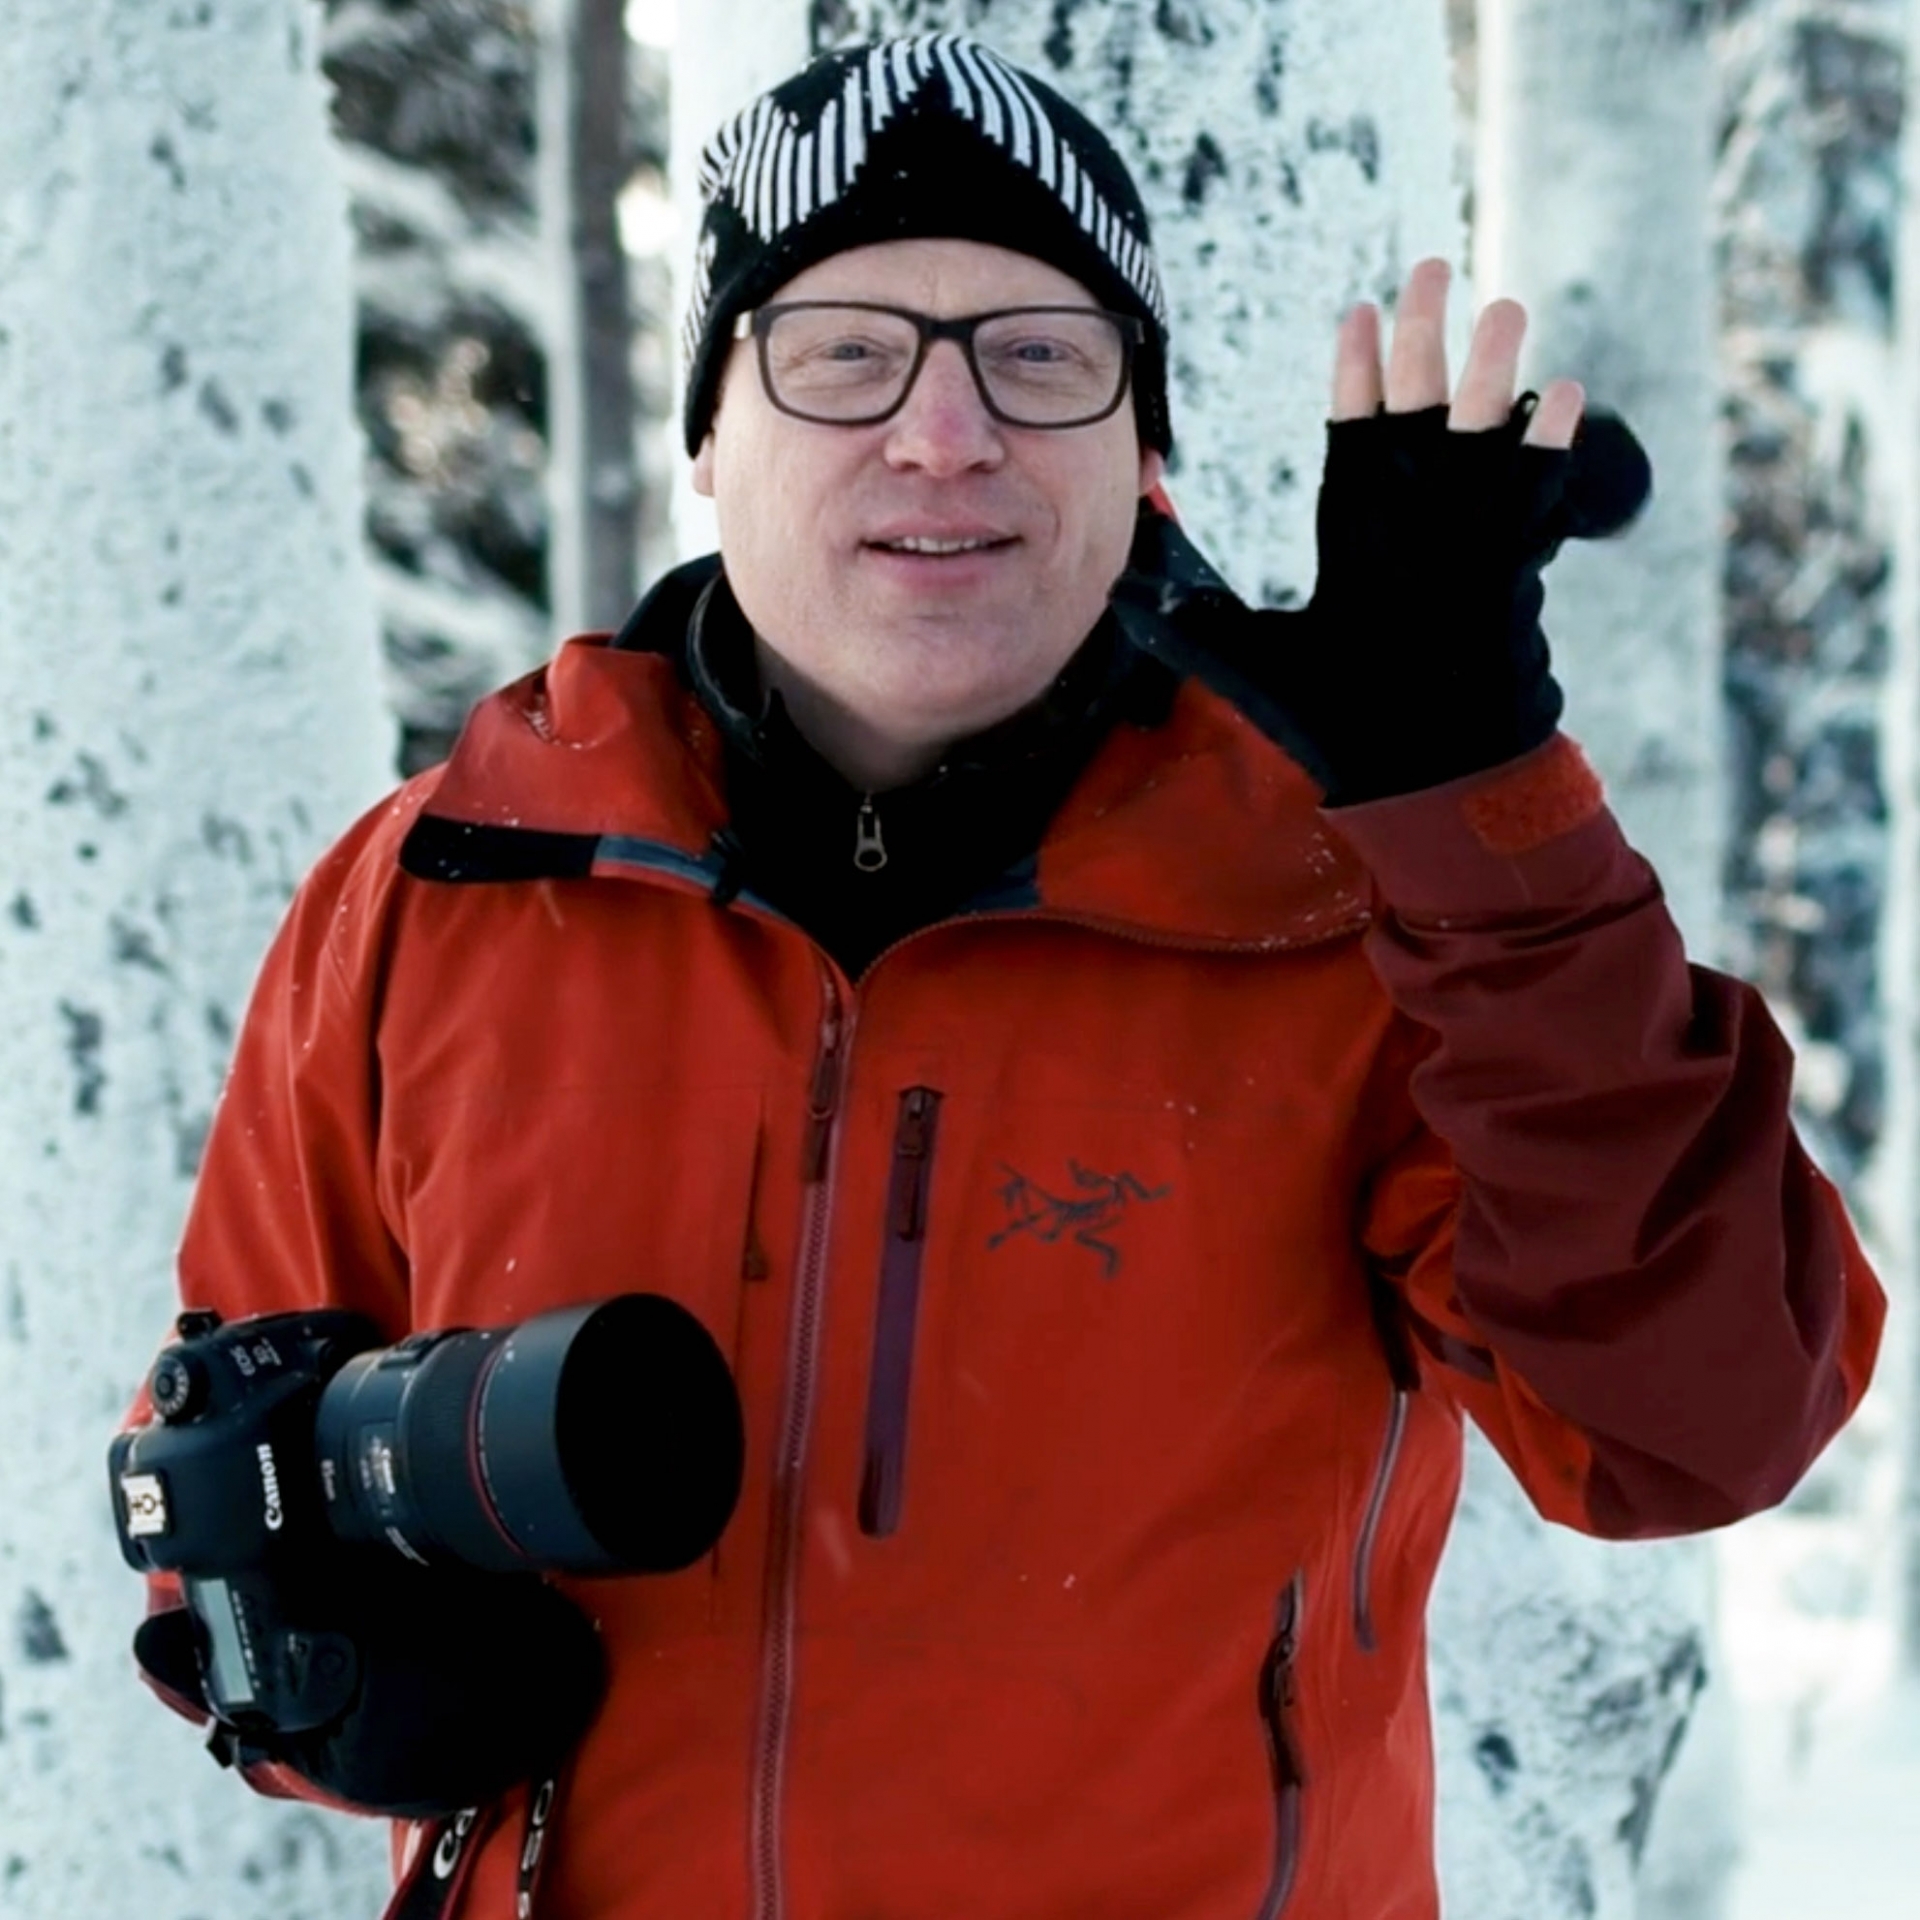 Richard Walch, Handschuhe zum Fotografieren, Fotografieren im Winter